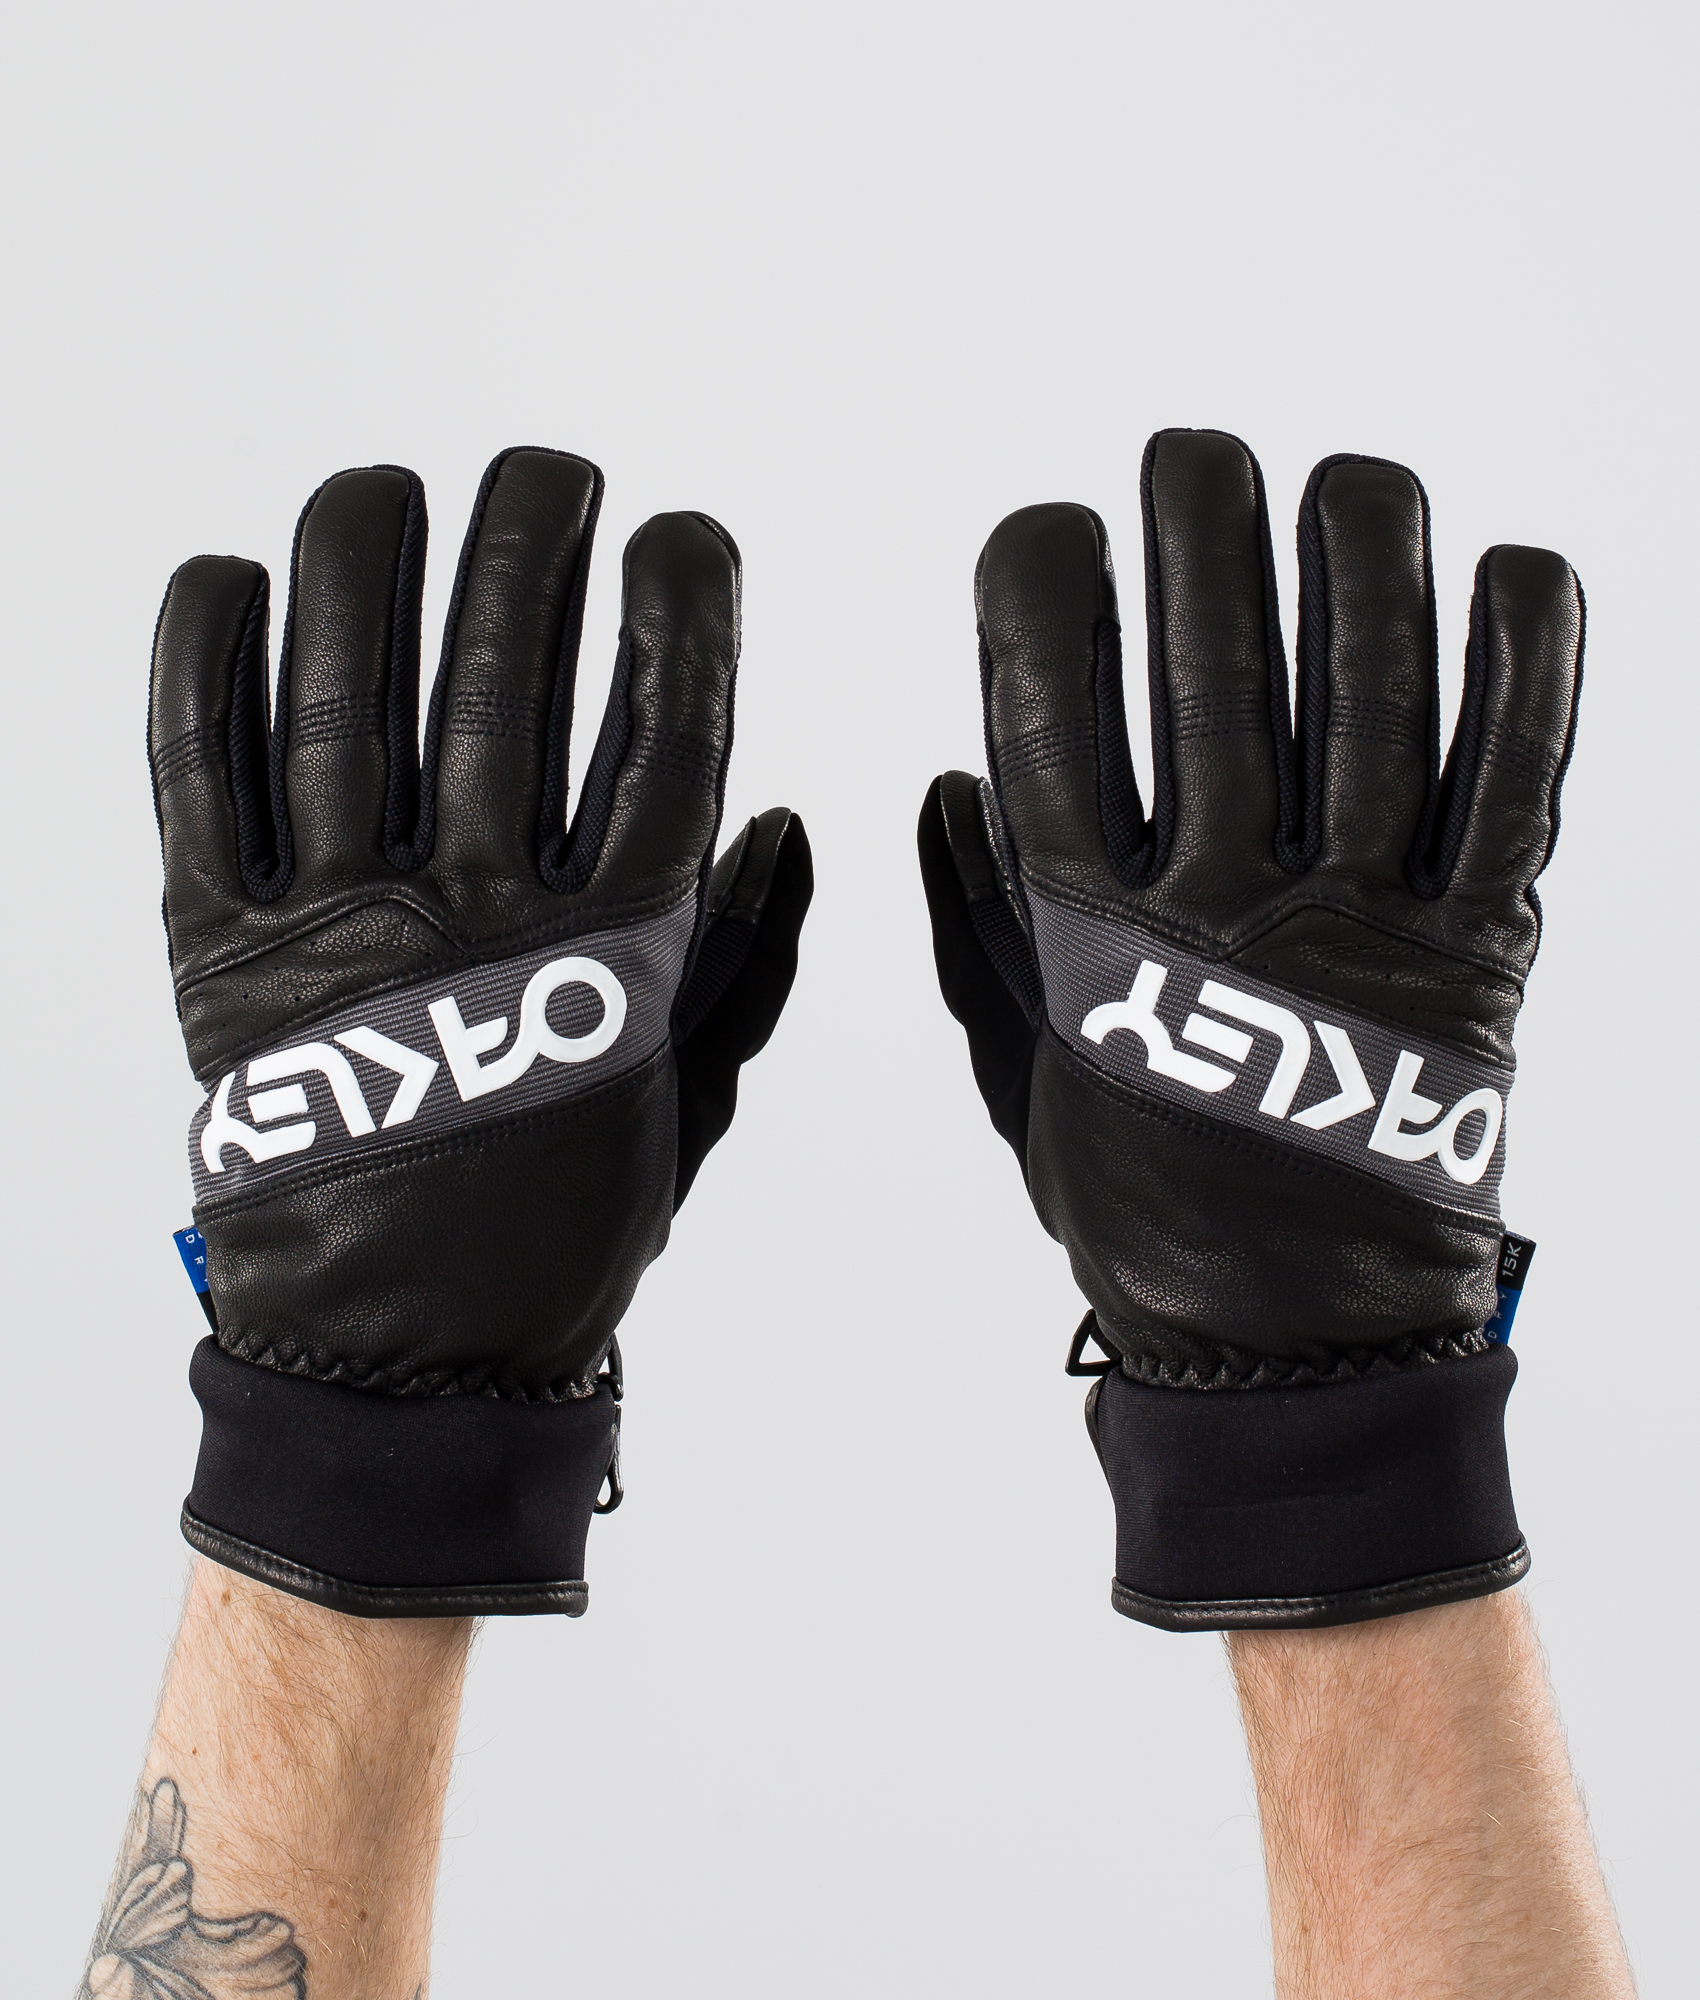 factory winter glove 2